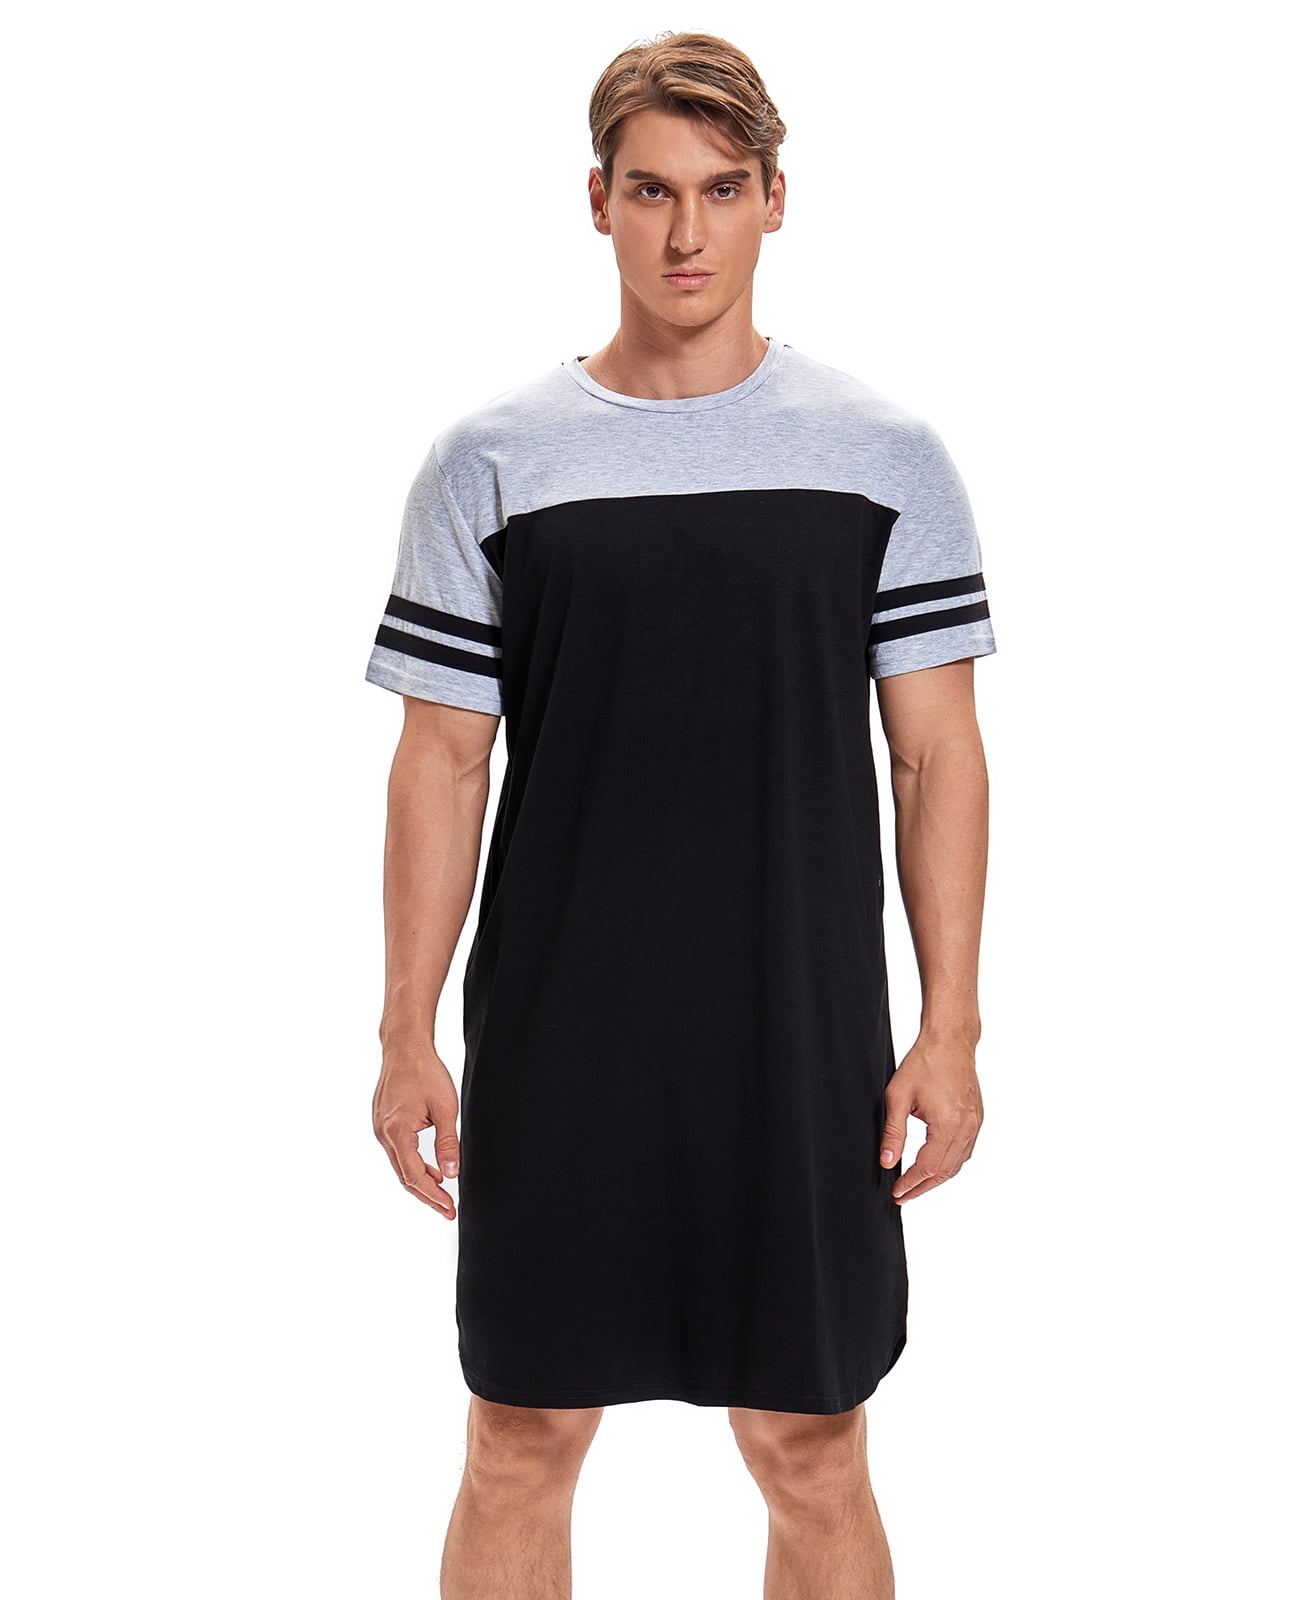 MINTLIMIT Men's Cotton Nightwear Long Night Shirts Short Sleeve Sleepwear Pockets Nightgown Big&Tall Soft Sleep Shirt M-XXXL 